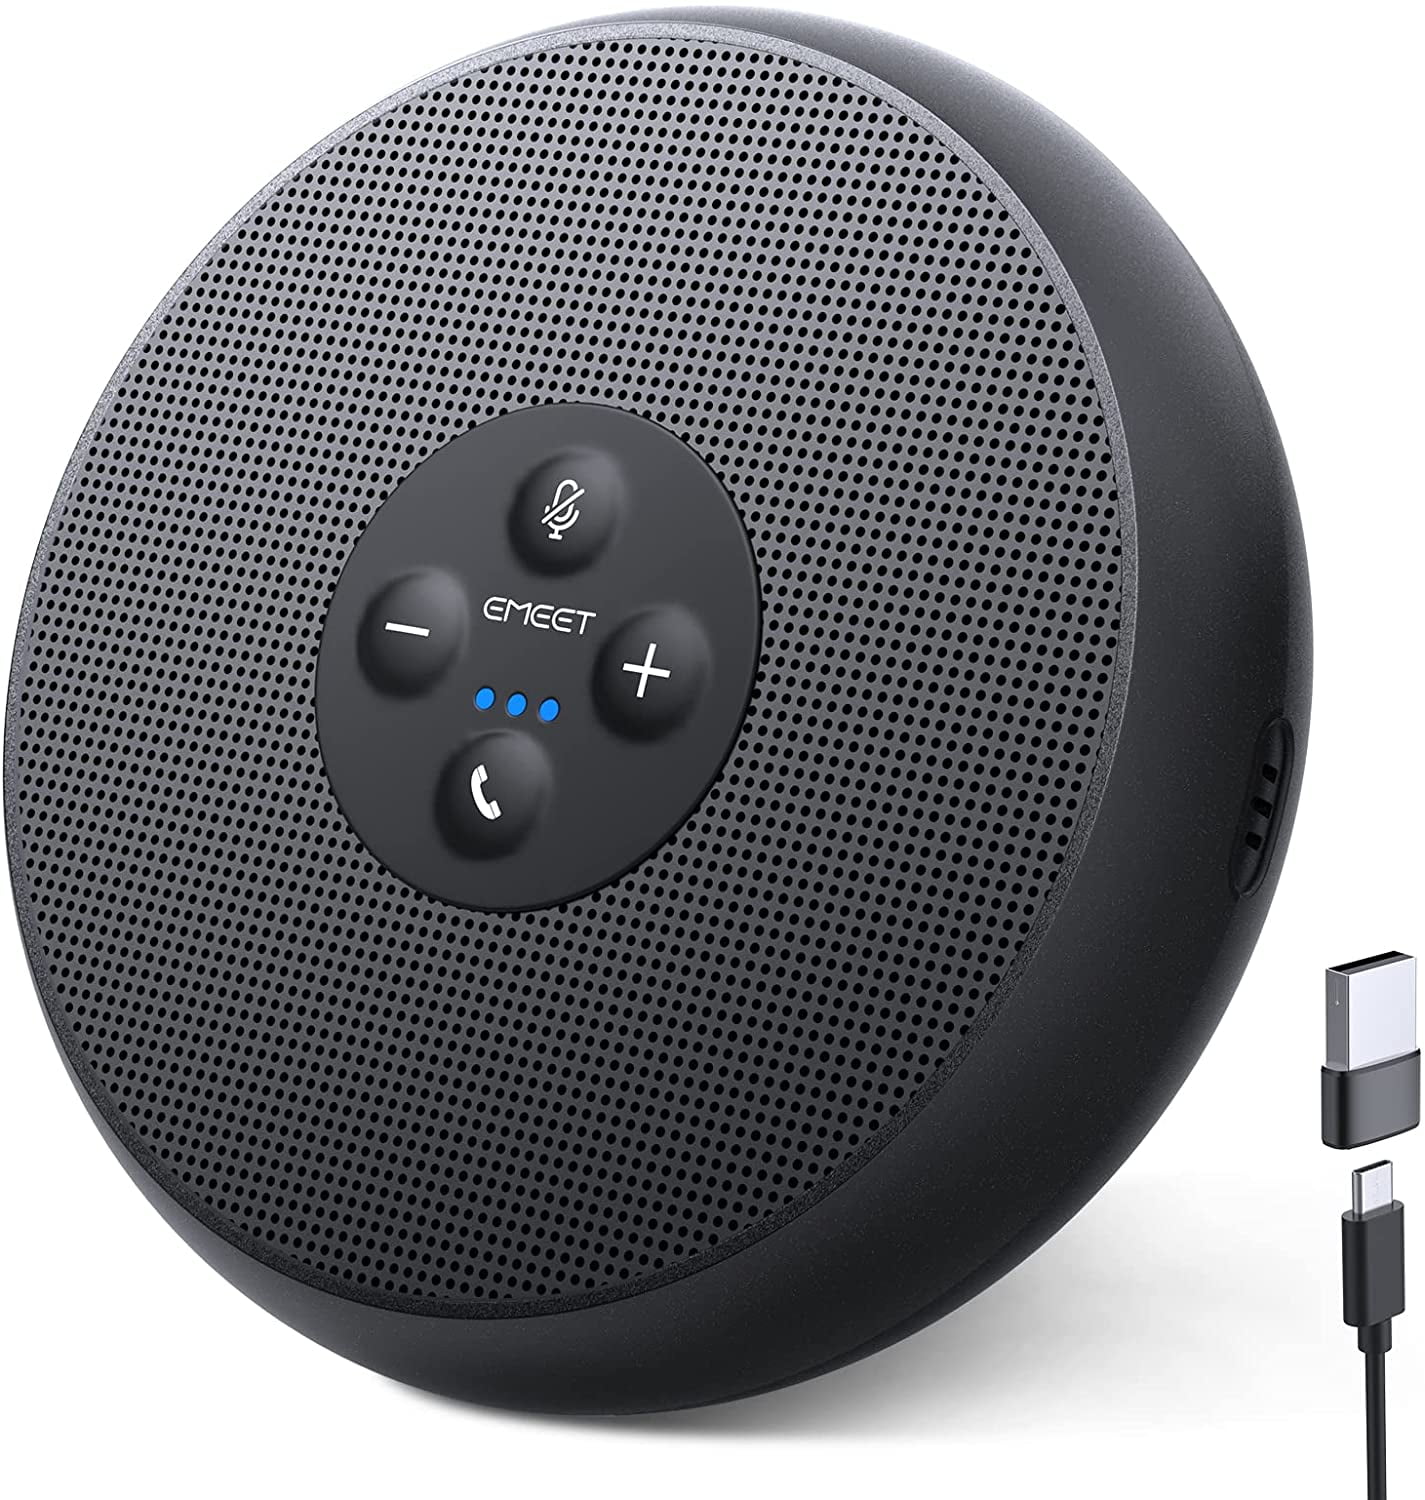 Speakerphone/bluetooth Conference Speaker Reduction Noise USB EMEET speaker W/Microphones M1A